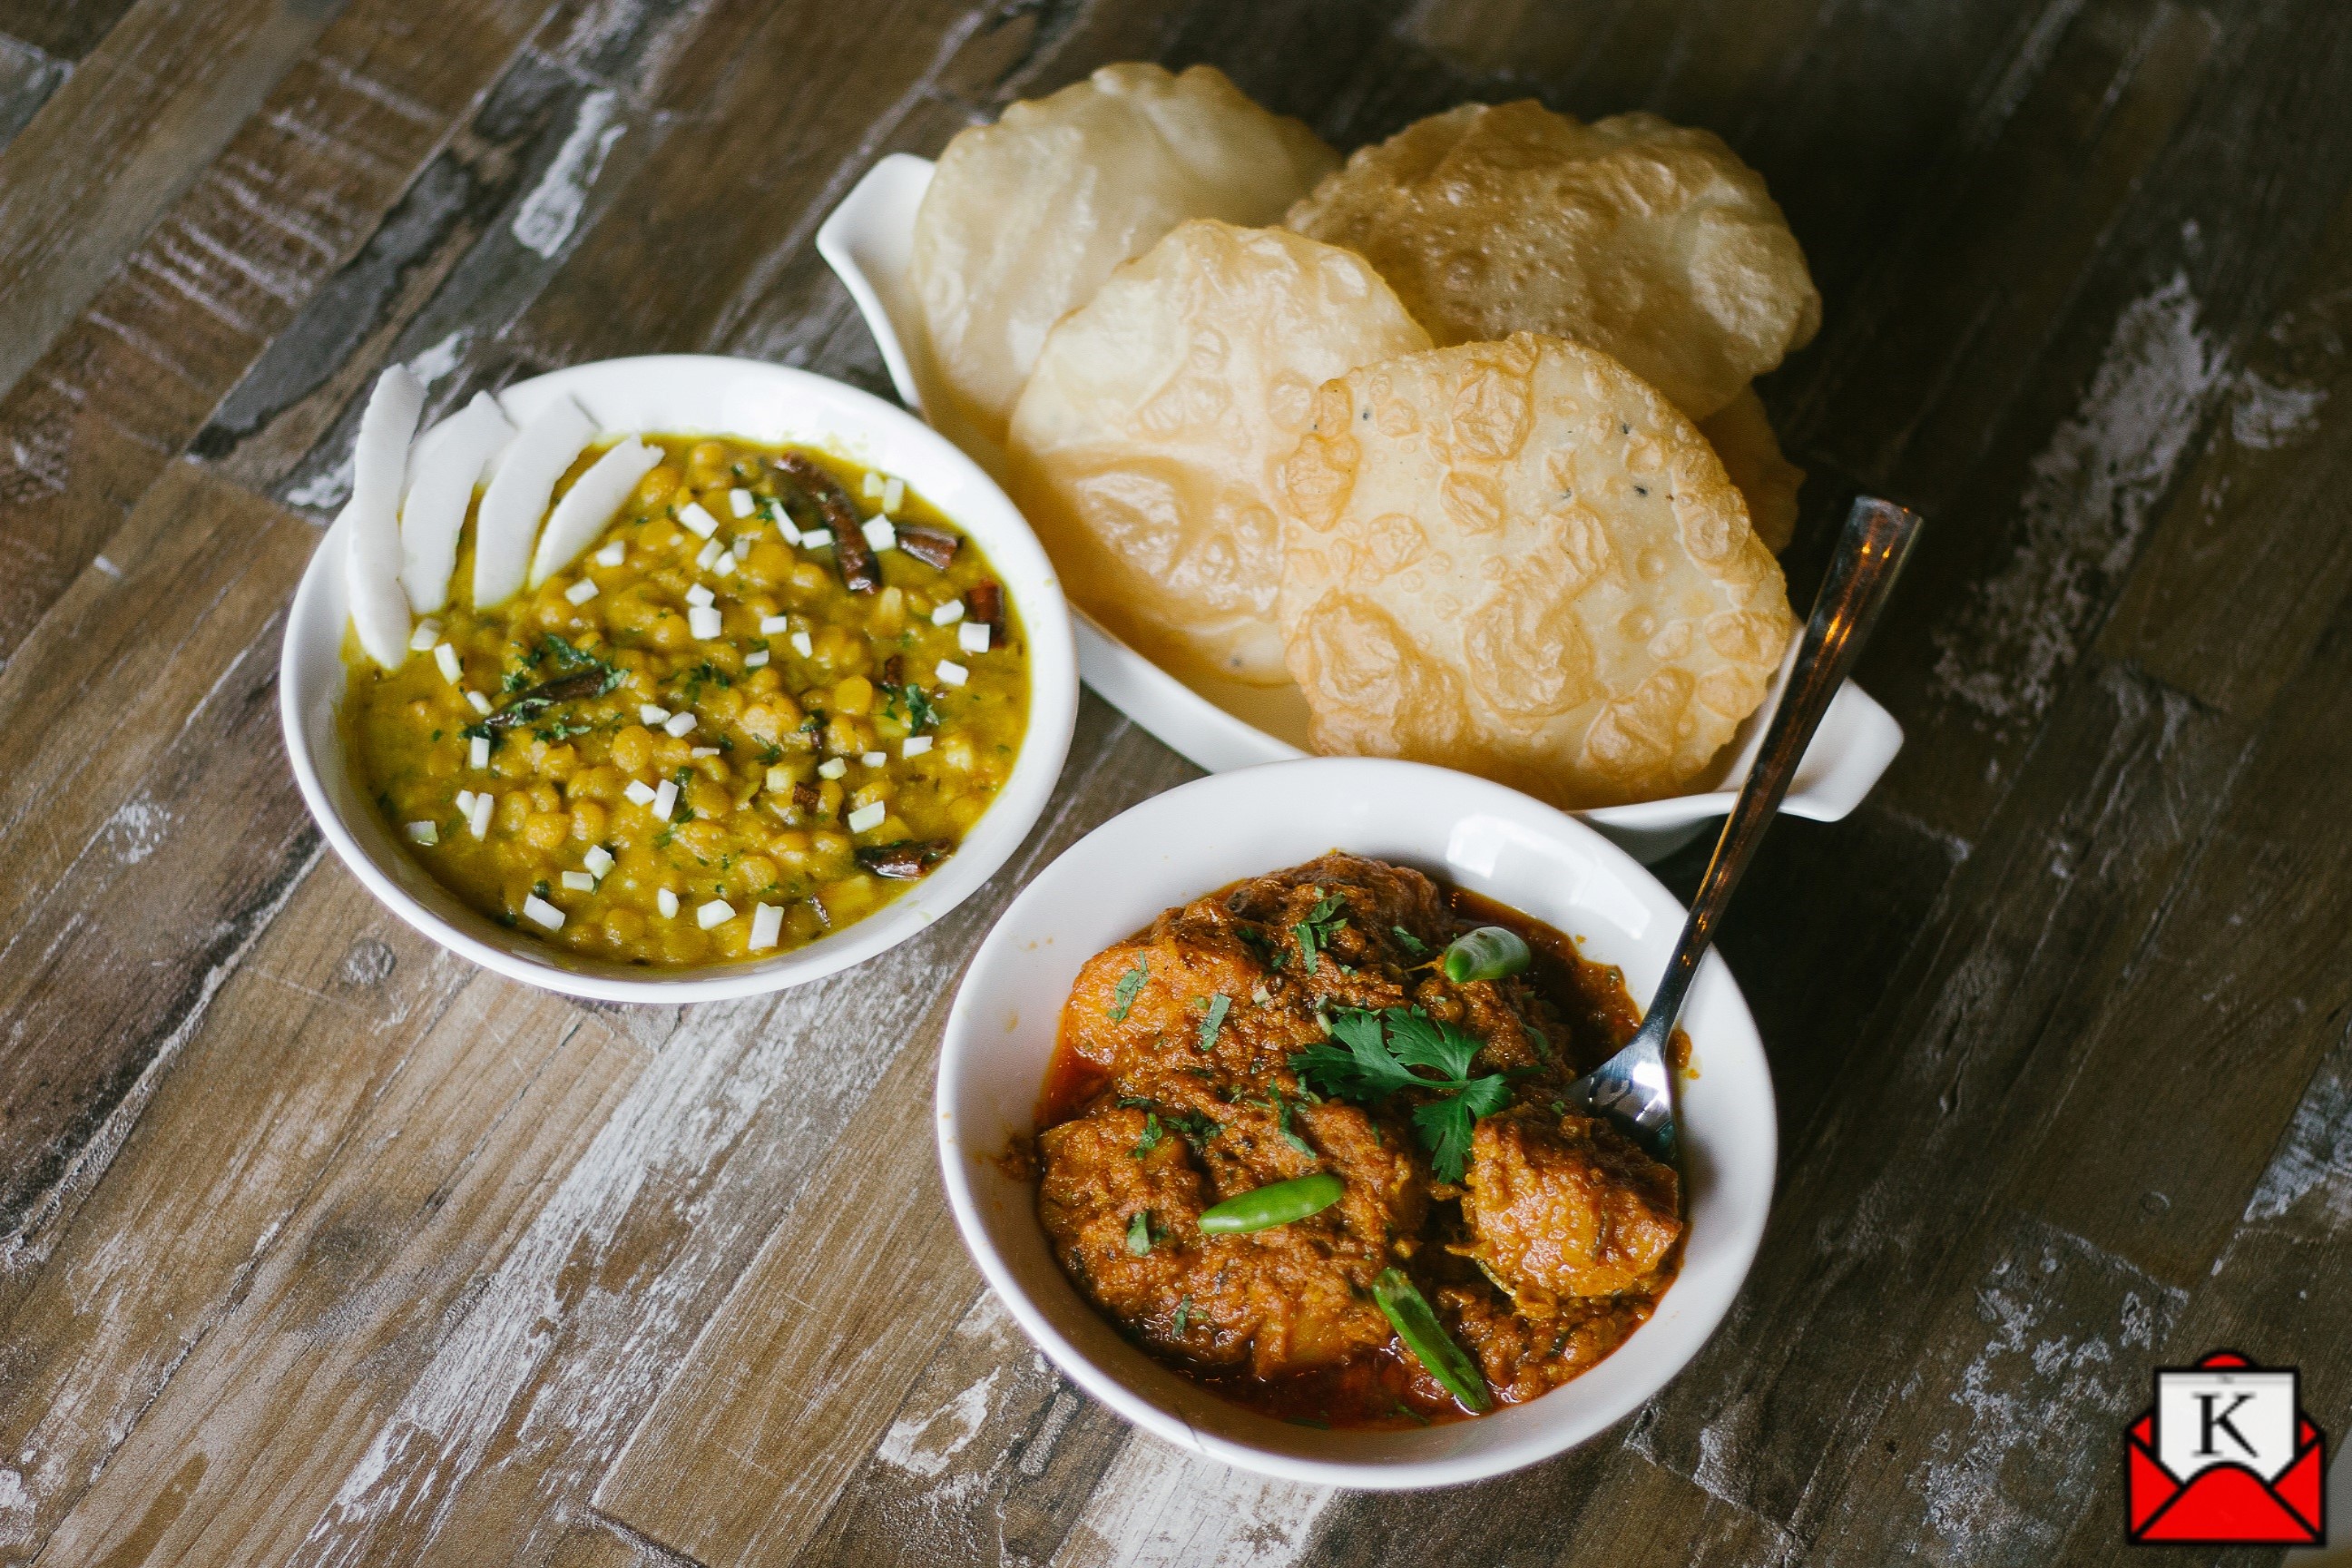 Enjoy Delicious Food During Durga Puja at Sly Fox Gastro Club, Friday Release and Barocks Club